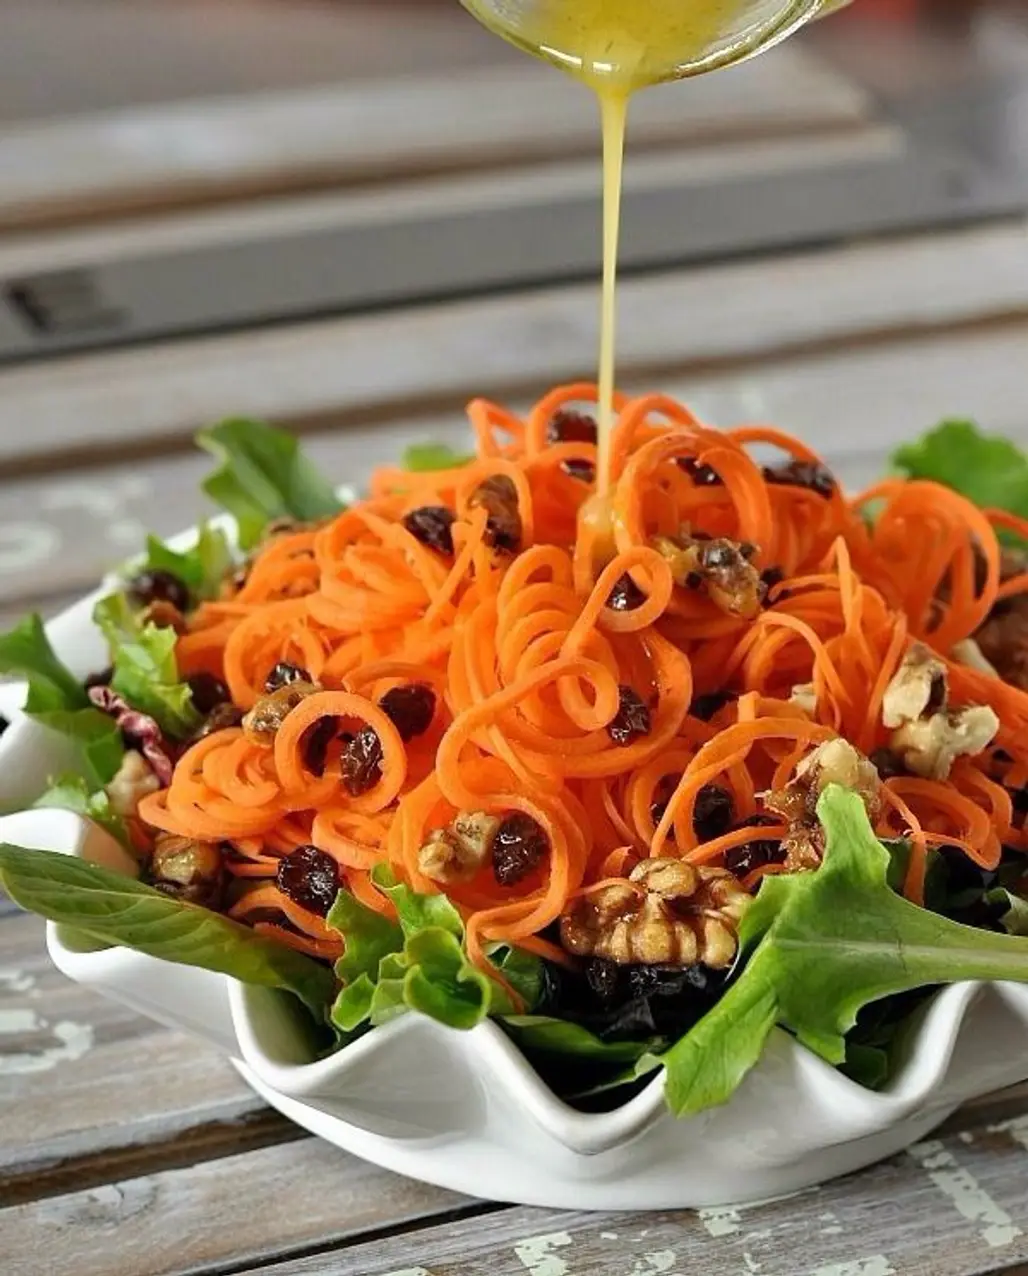 Carrot Salad with Lemon-Dijon Vinaigrette, Raisins and Candied Walnuts